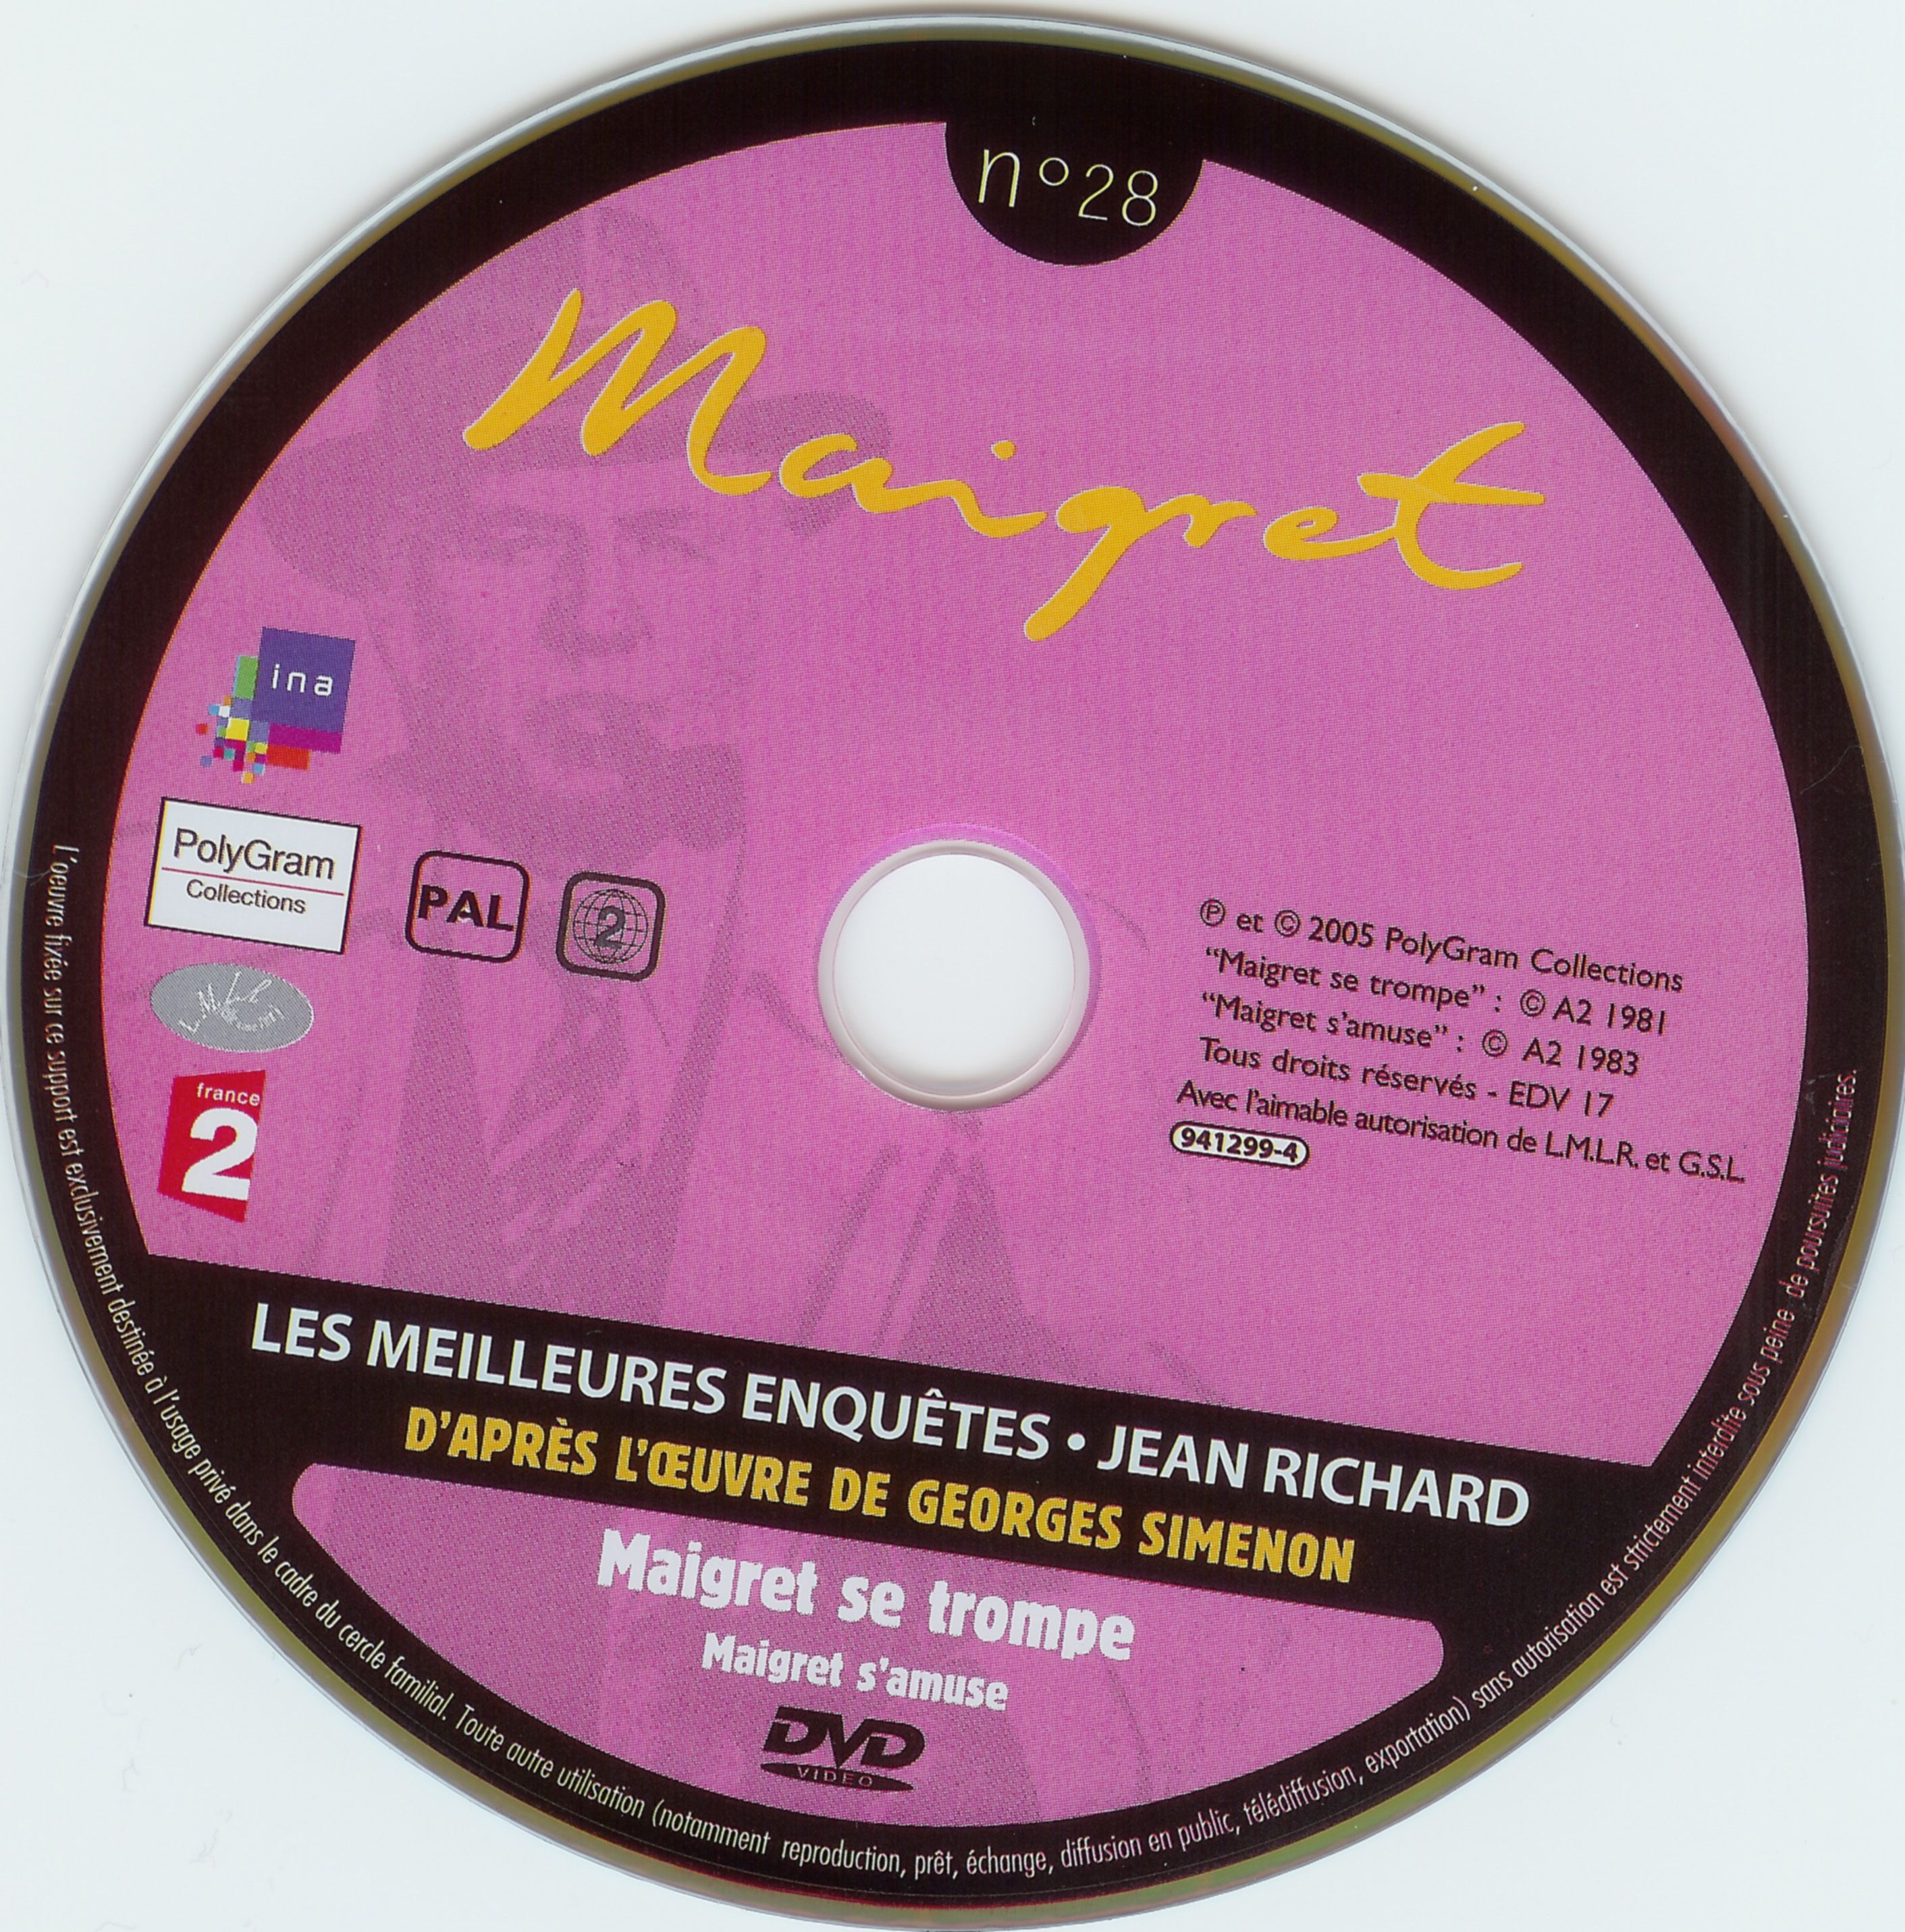 Maigret (Jean Richard) vol 28